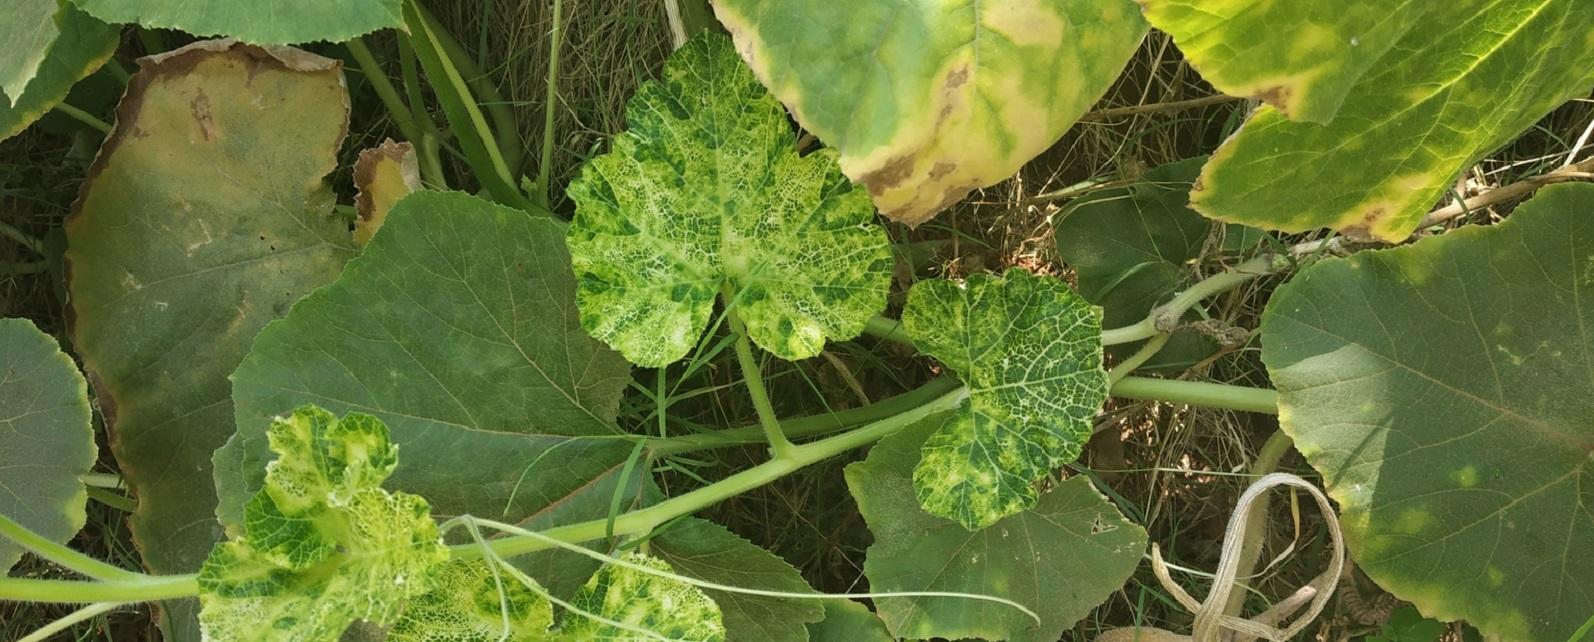 symptoms of cucumber mosaic virus on leaves